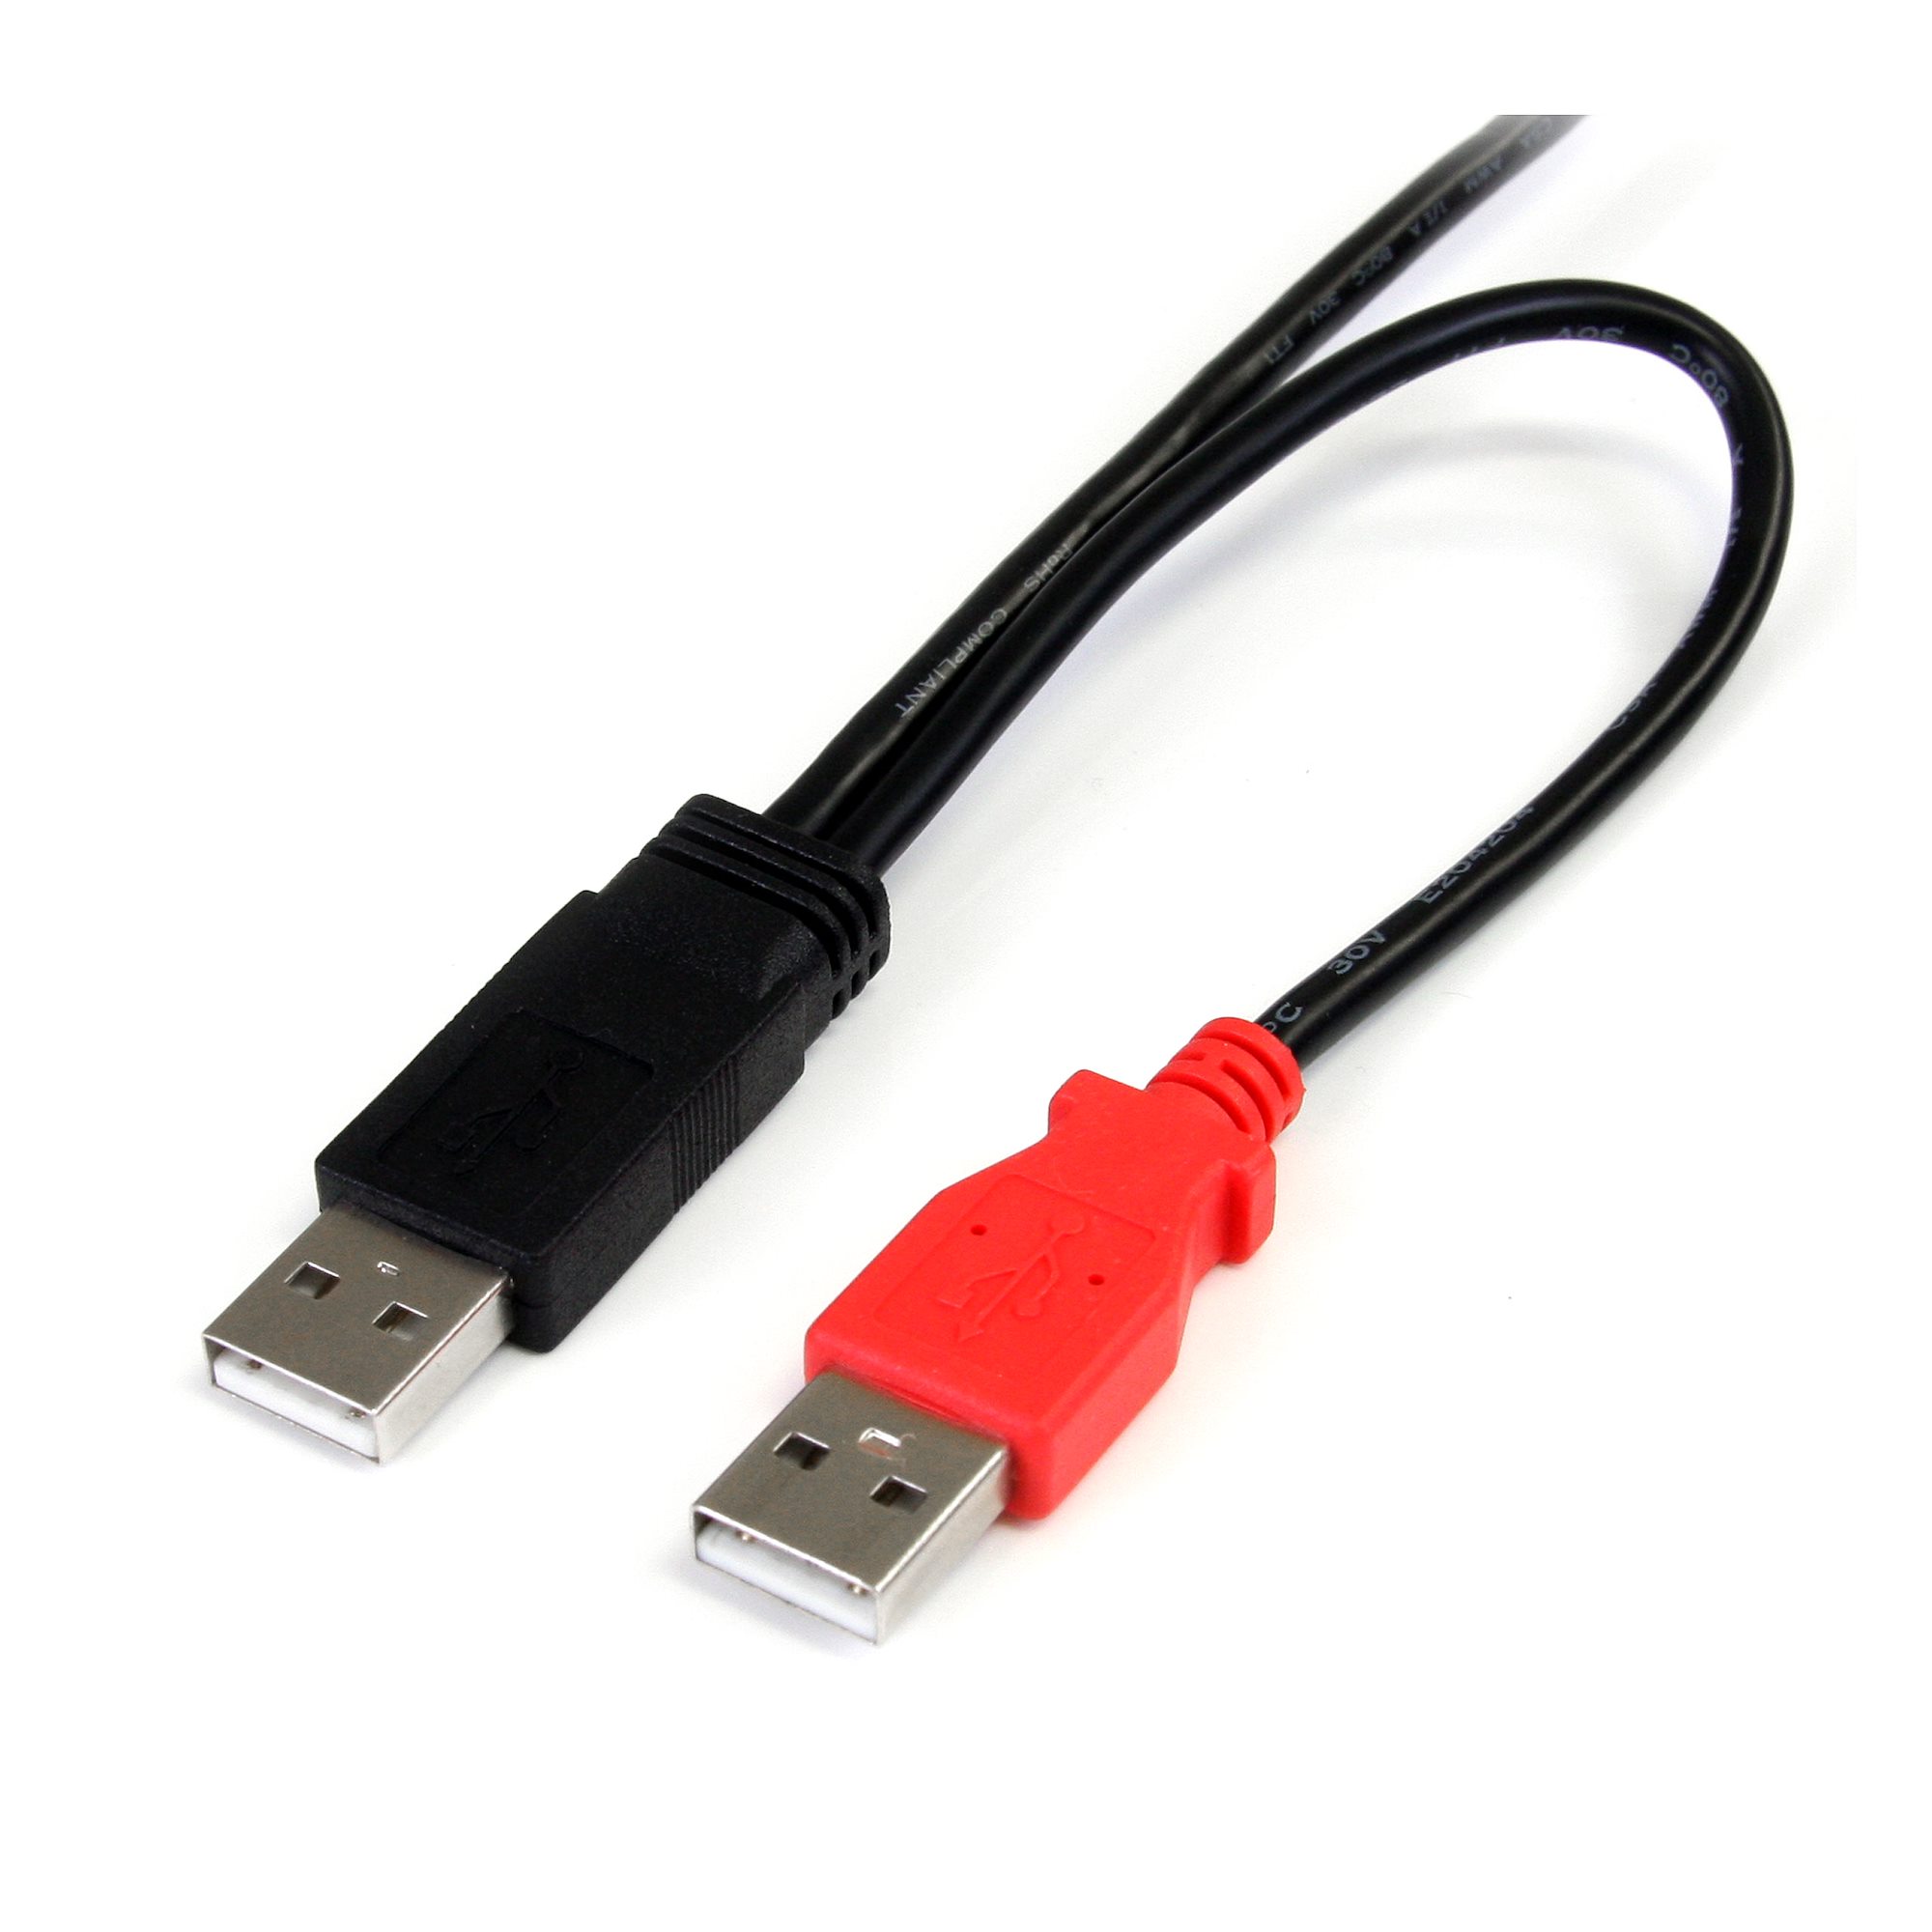 1 USB Y Cable External Hard Drive - Micro USB StarTech.com